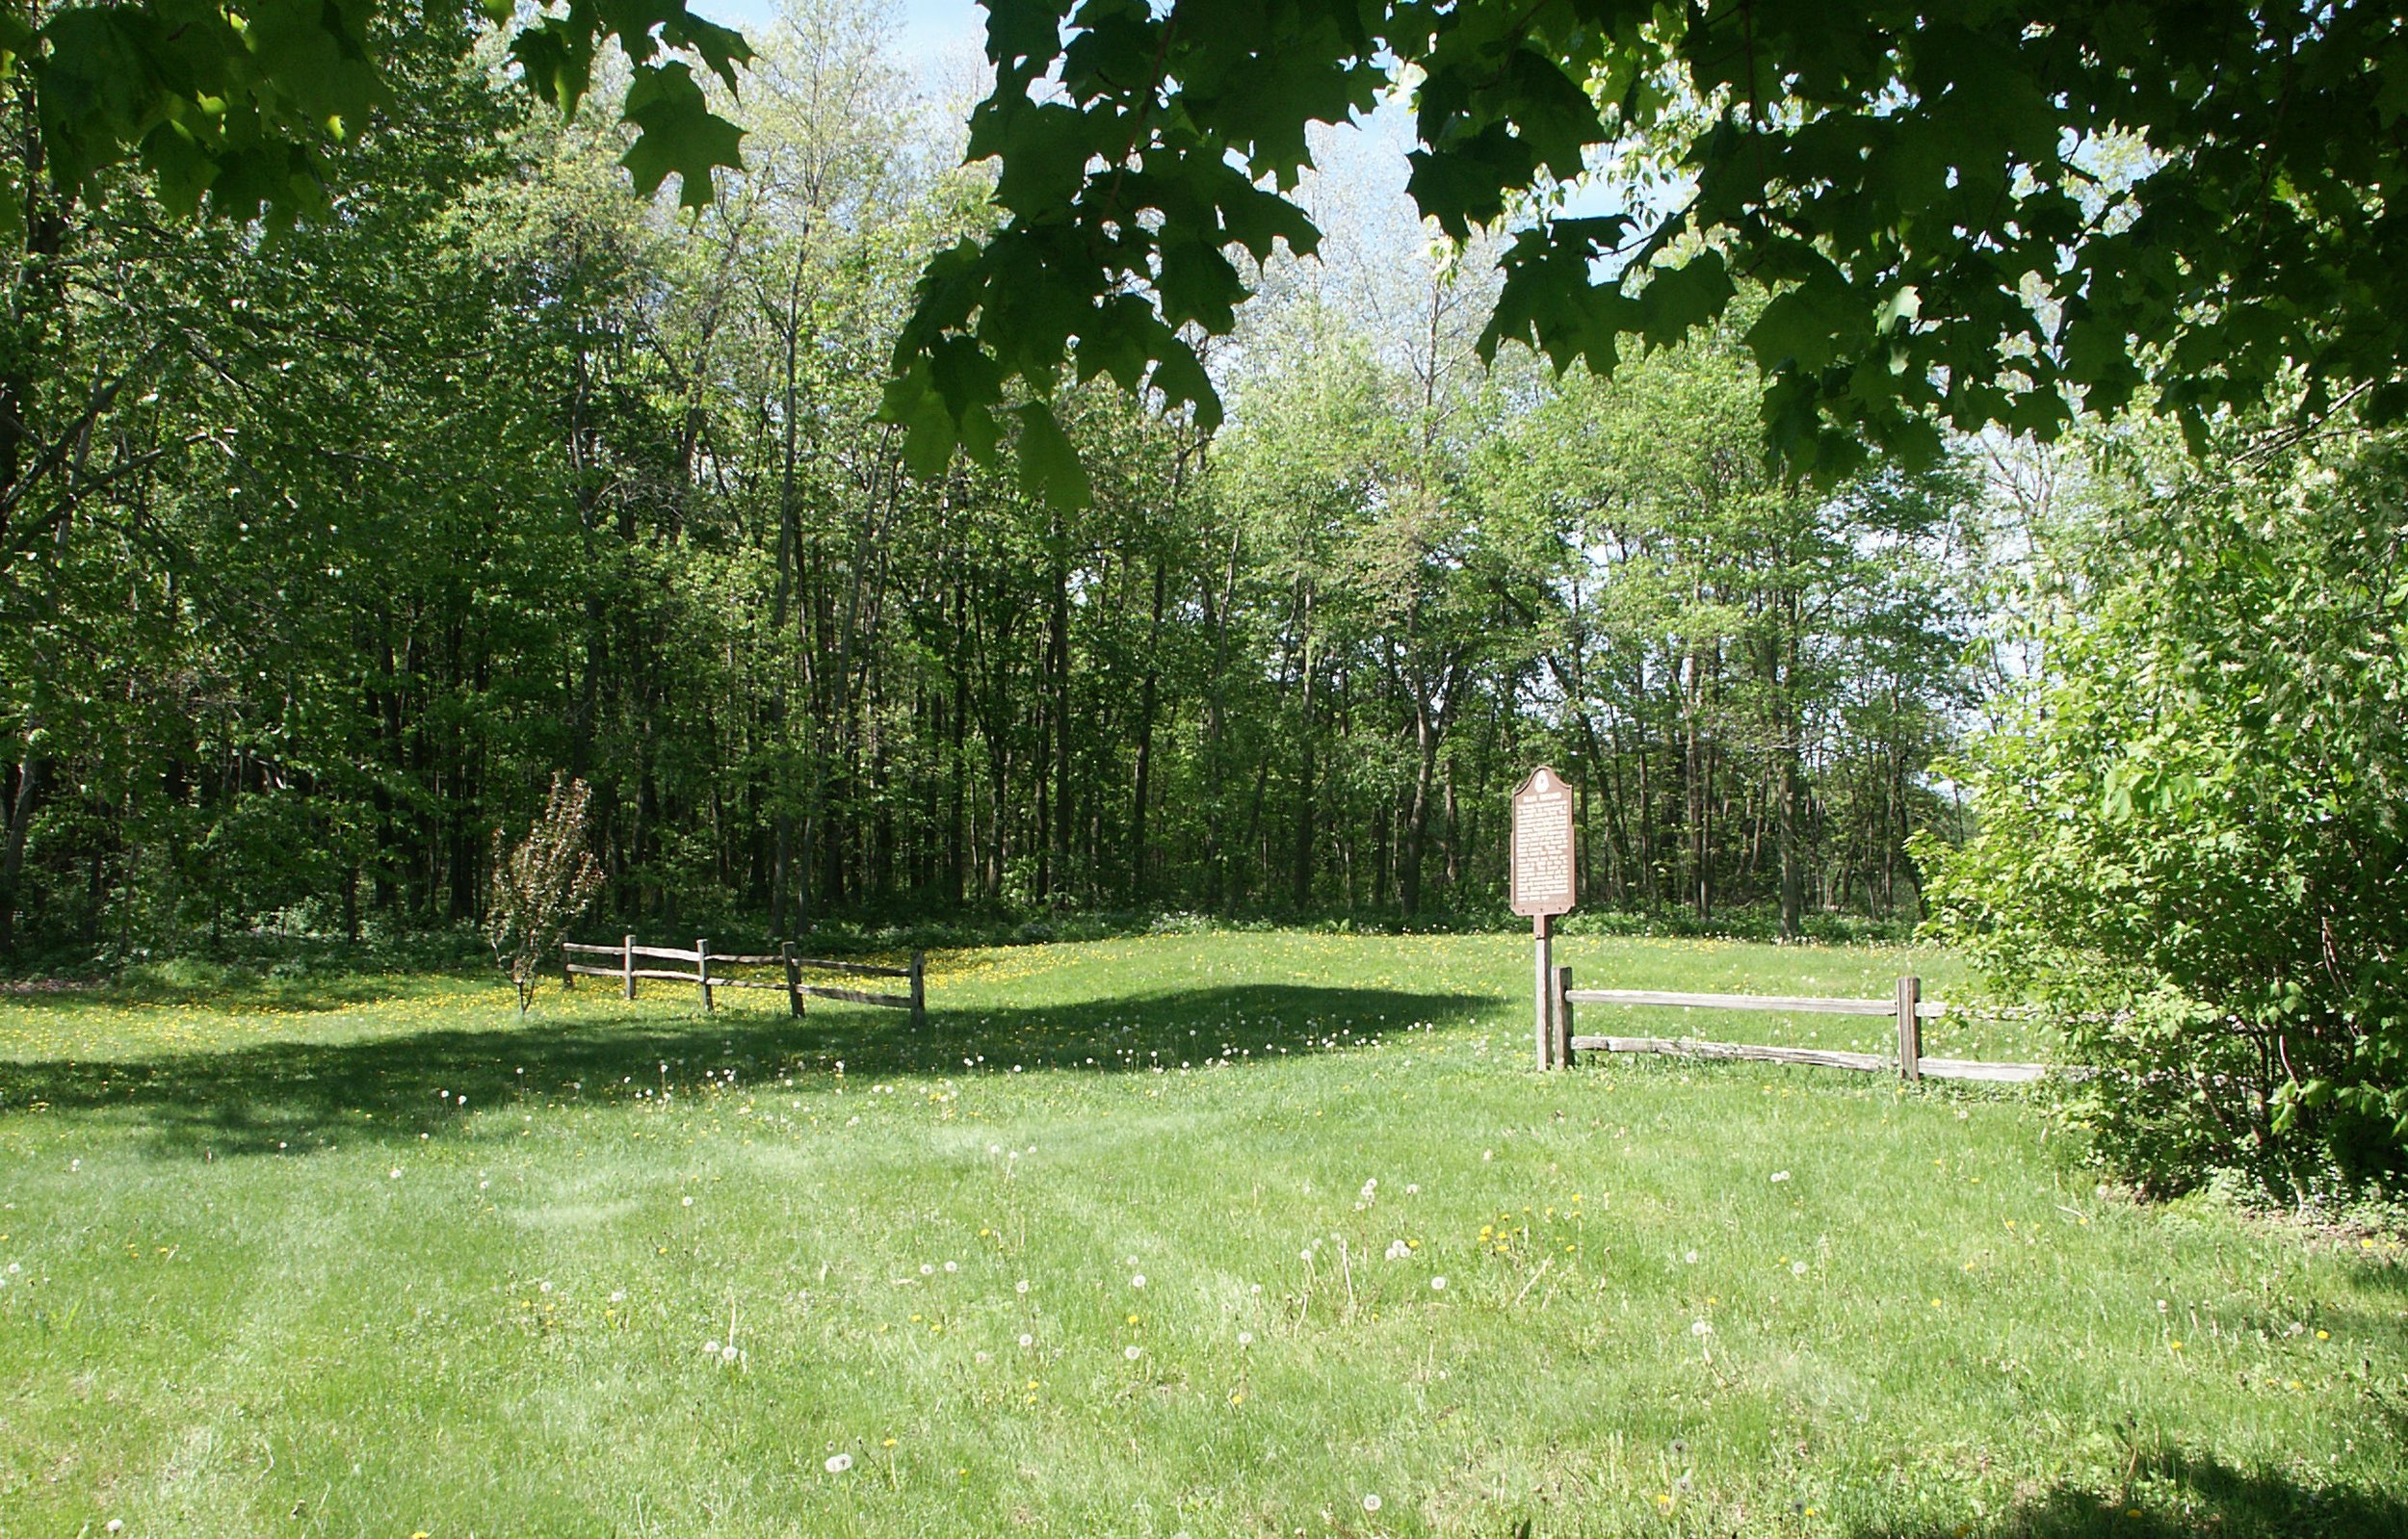 Man Mound Park 2, 5-19-04